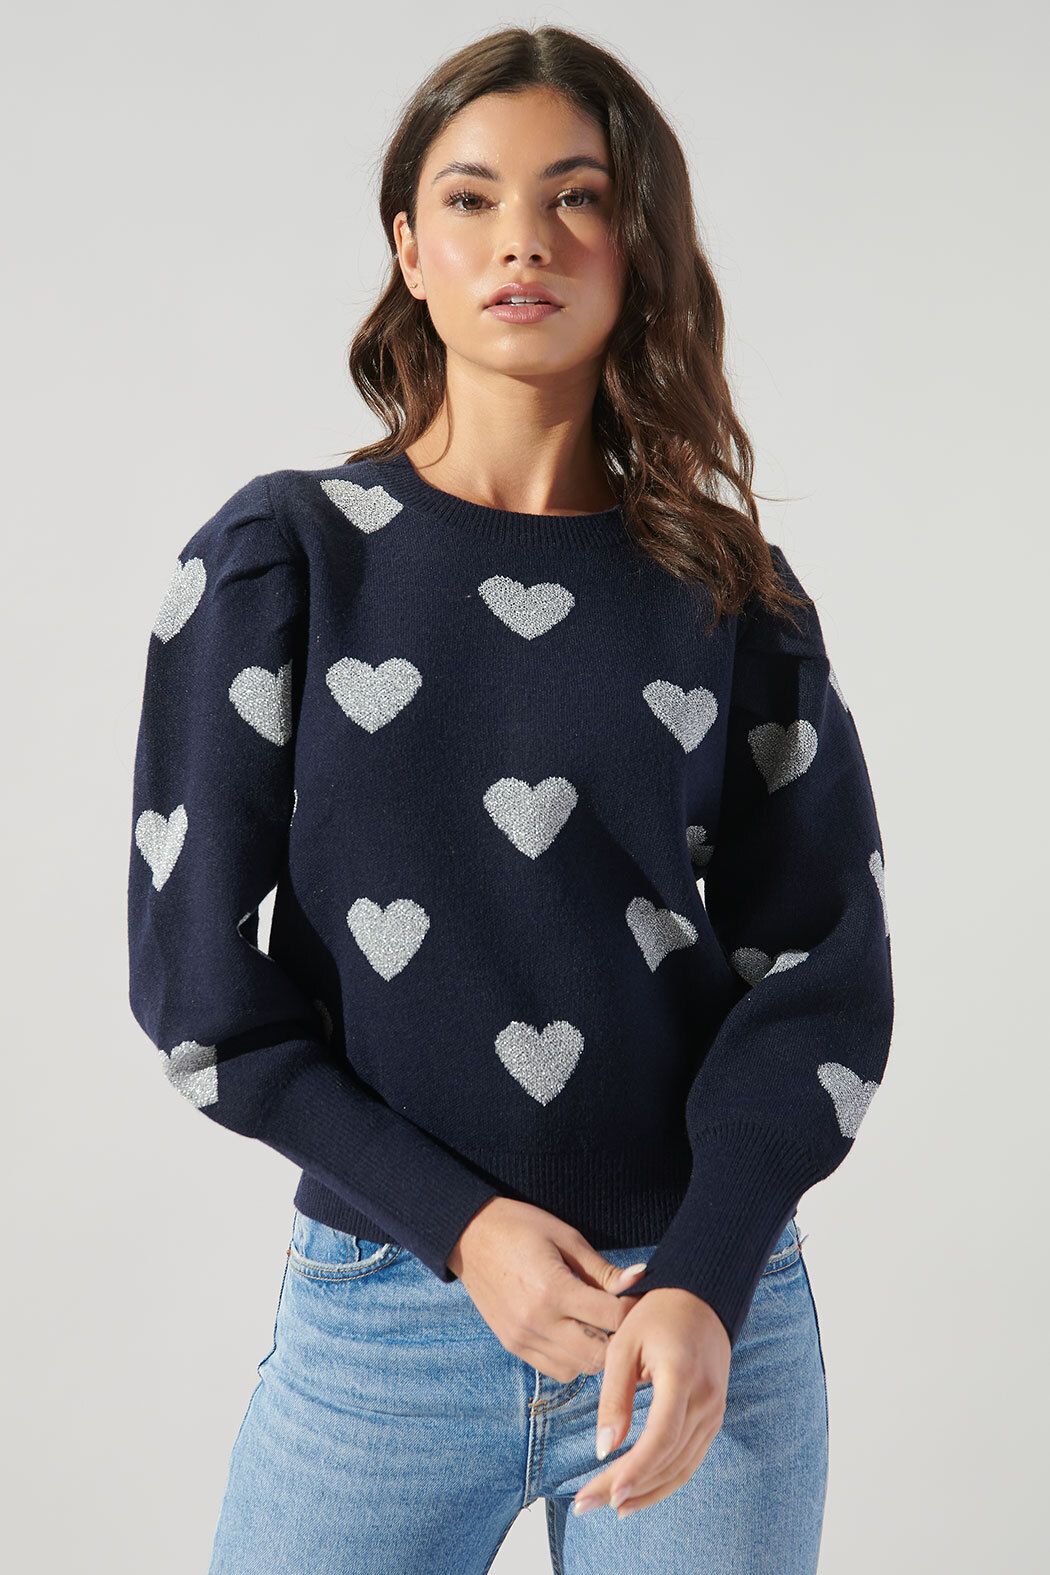 Sugar Lips | Navy Heart Sweater | Sweetest Stitch Online Boutique